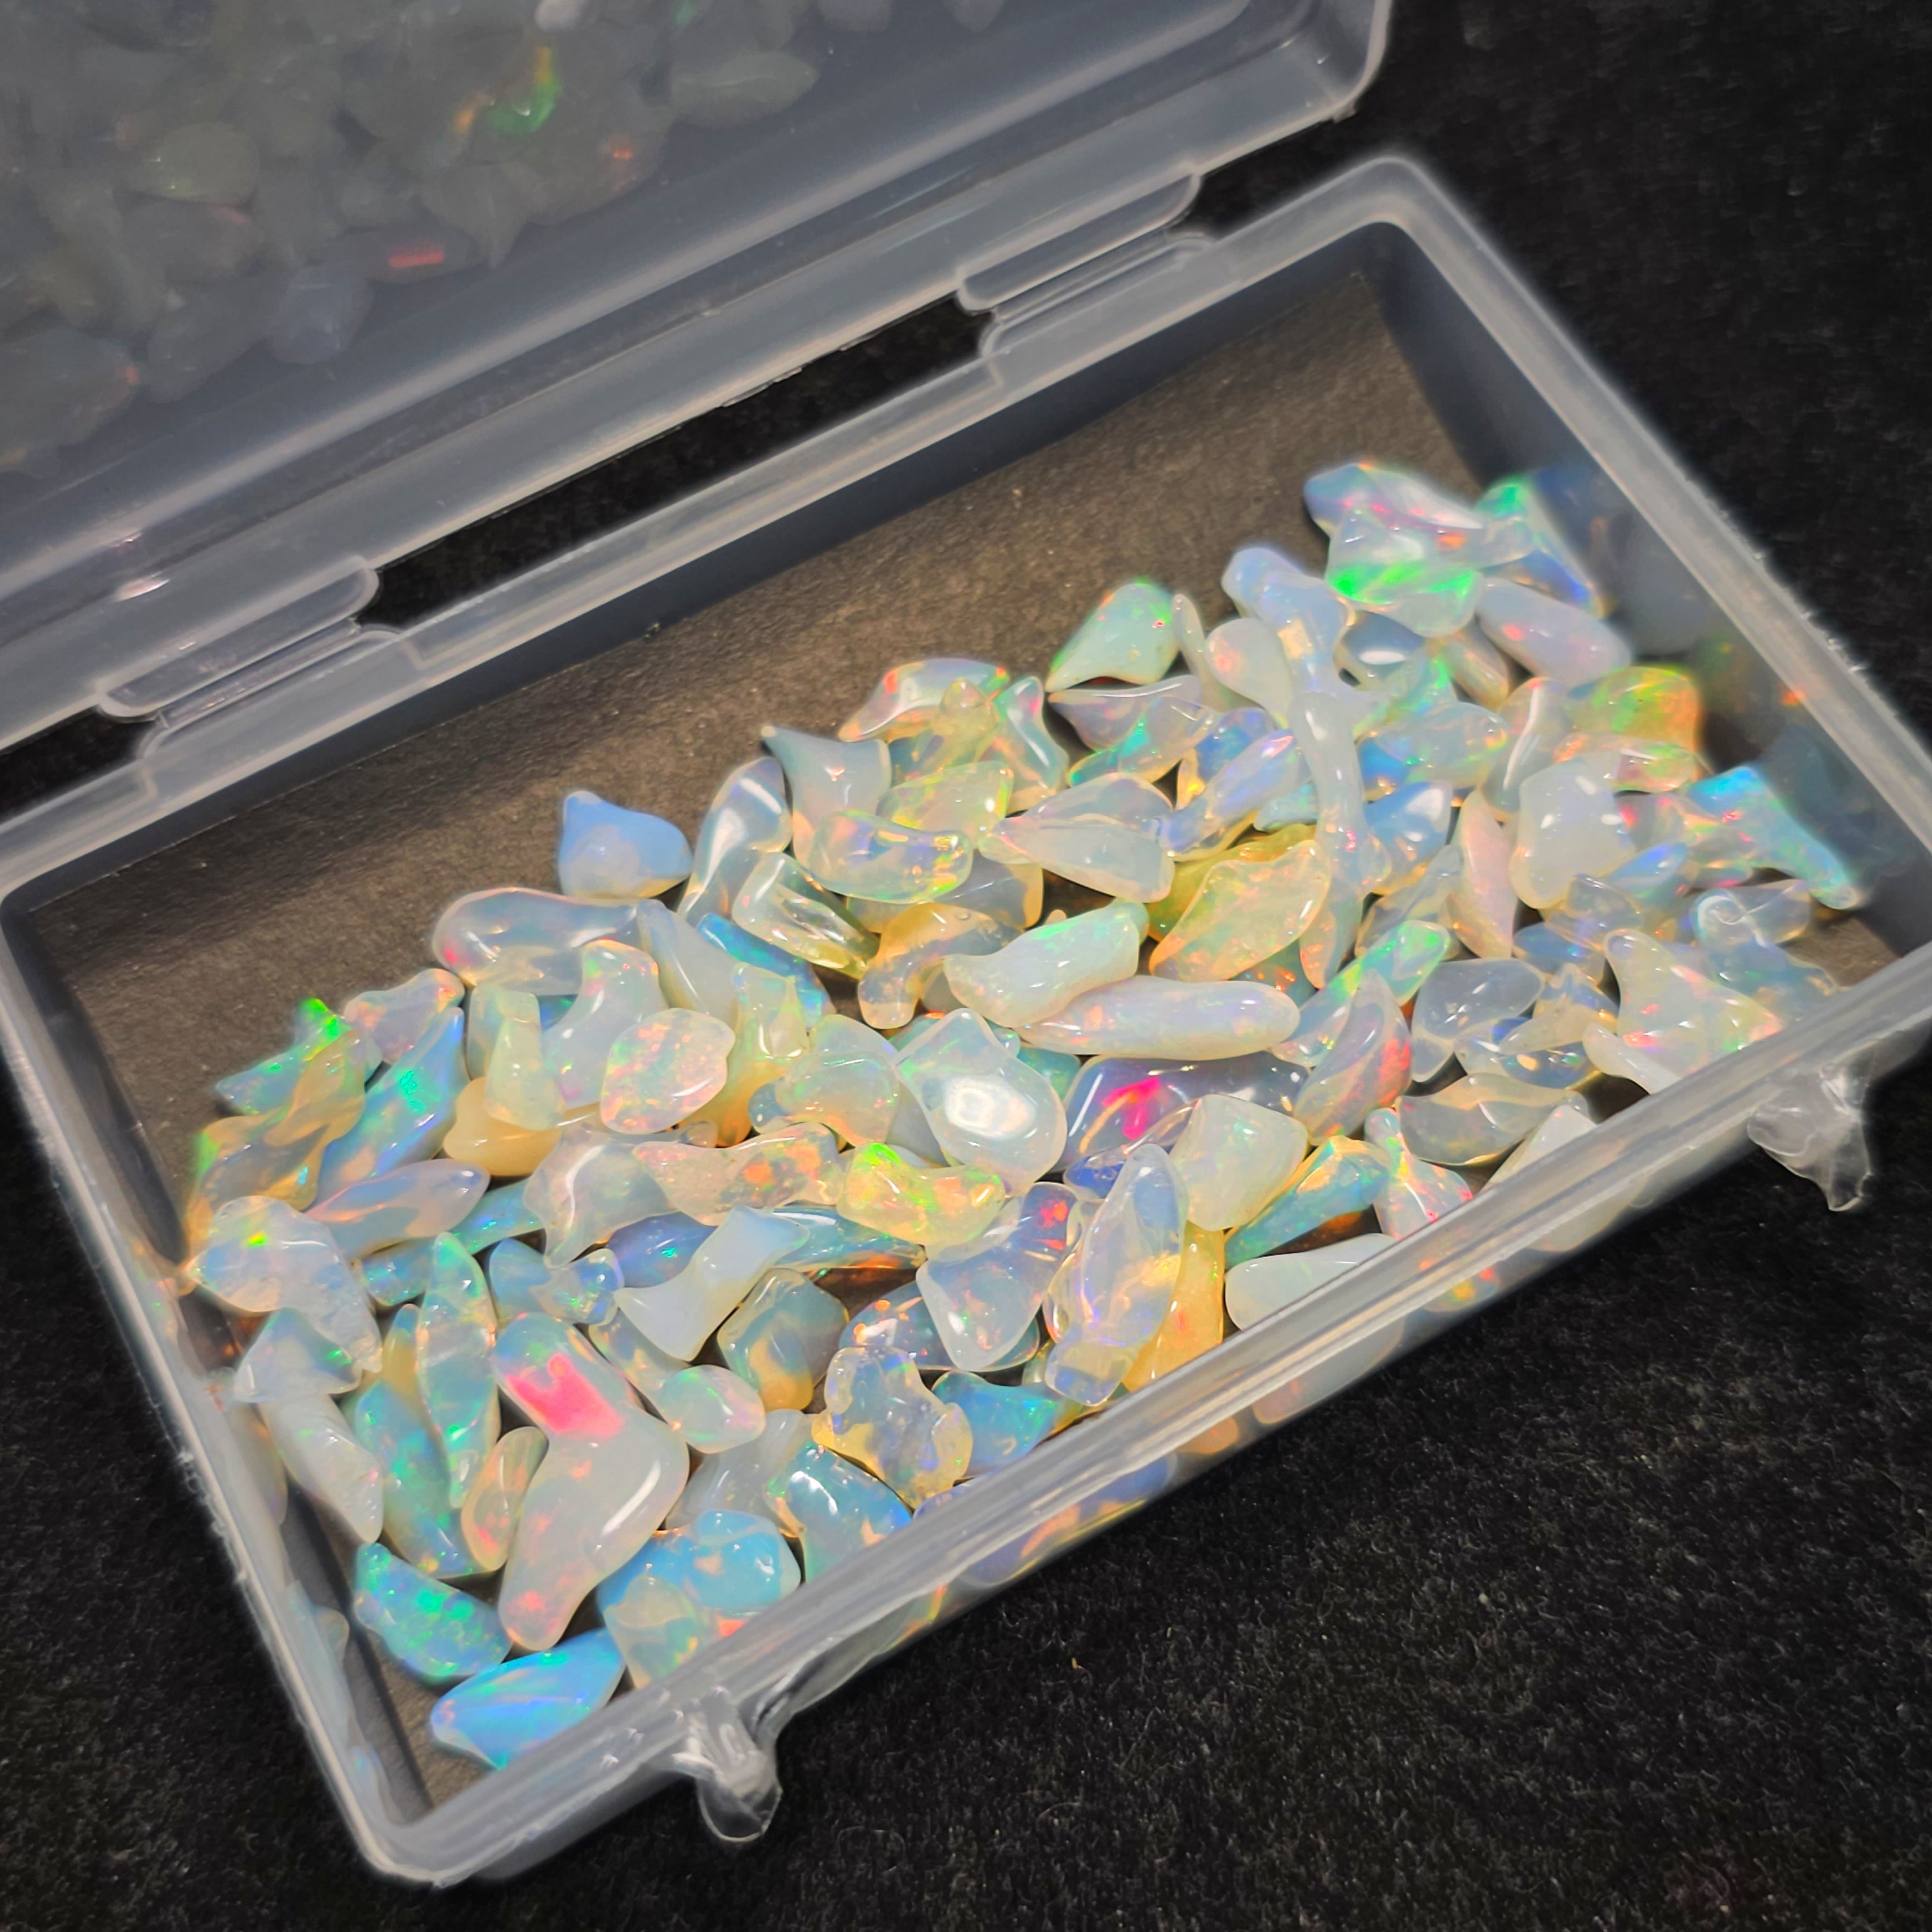 Polished Opal tumbels Box | 5-10mm | 70 Pcs - The LabradoriteKing